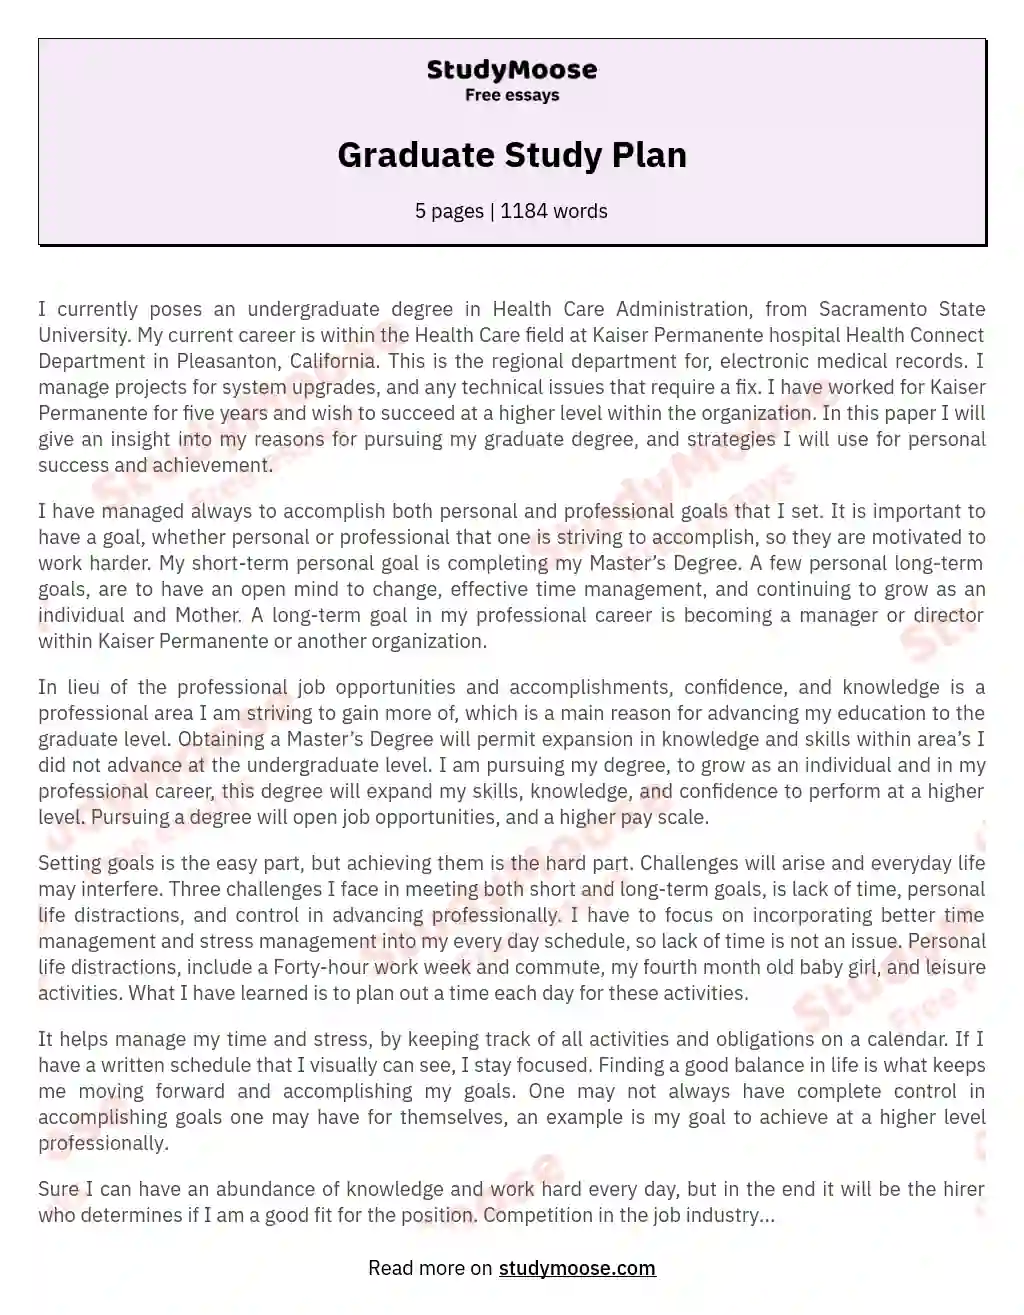 graduate-study-plan-free-essay-example